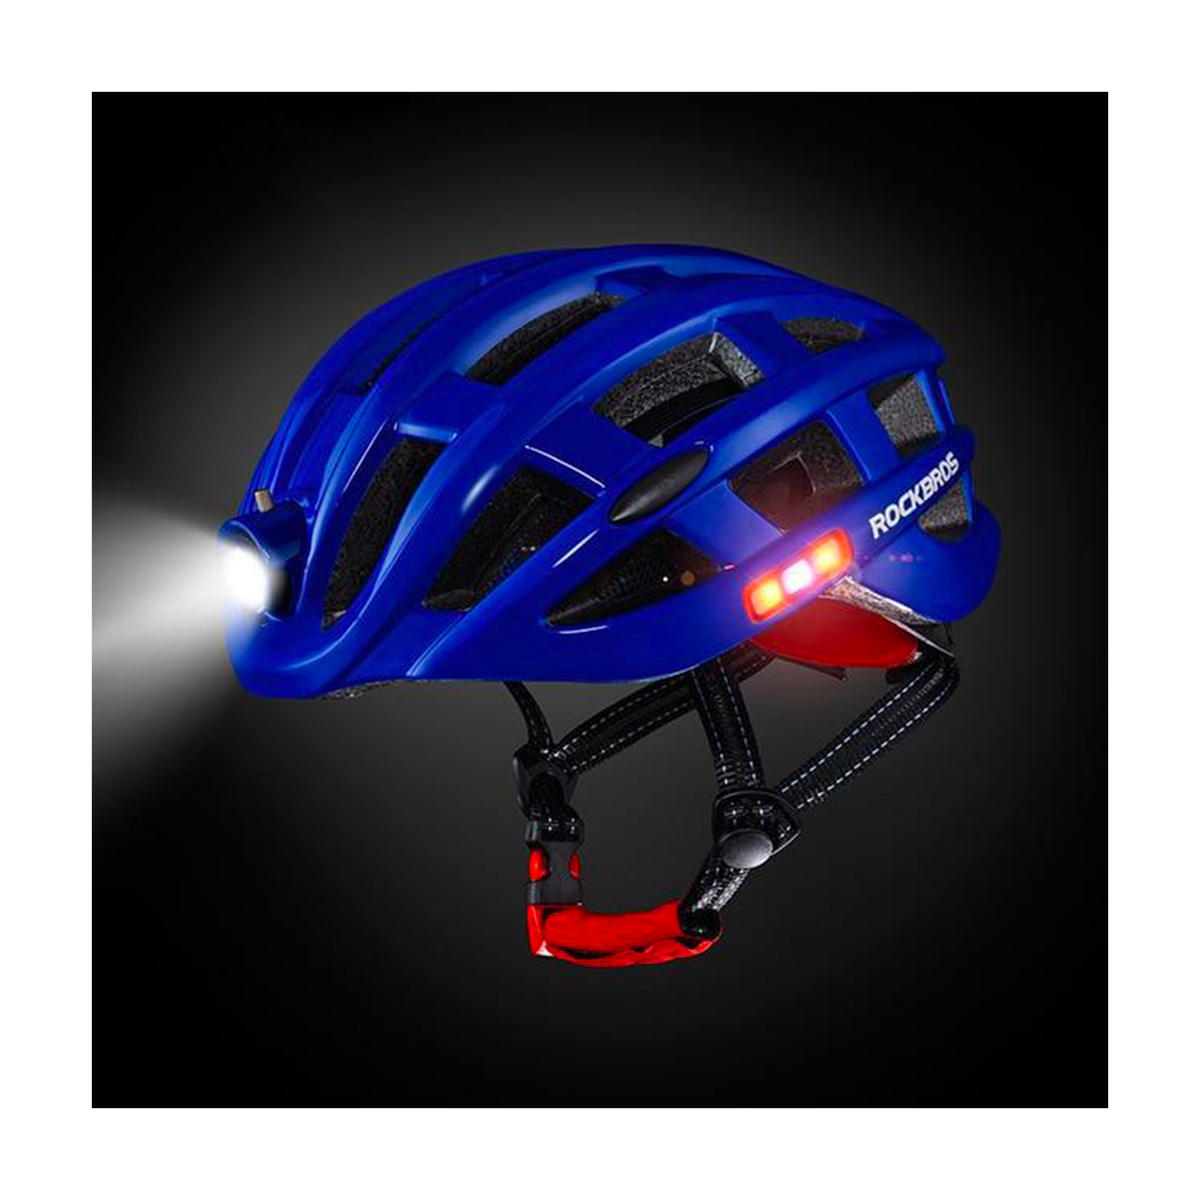 Rockbros Cycling Helmet With Light ZN1001-BL